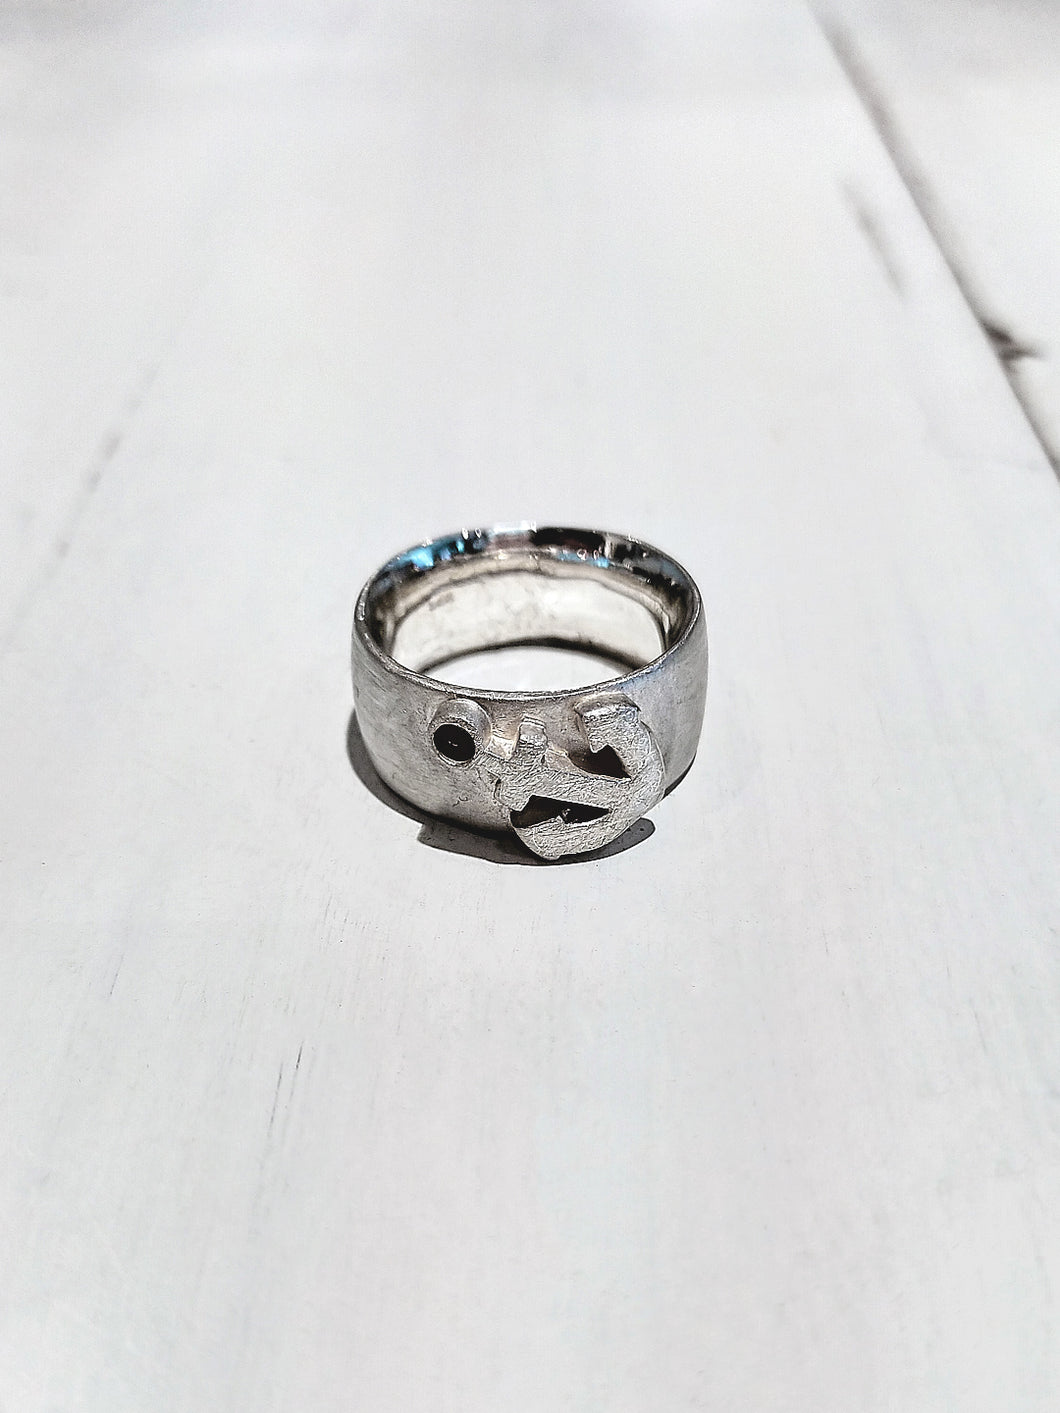 Silber Schmuck - Ring Anker